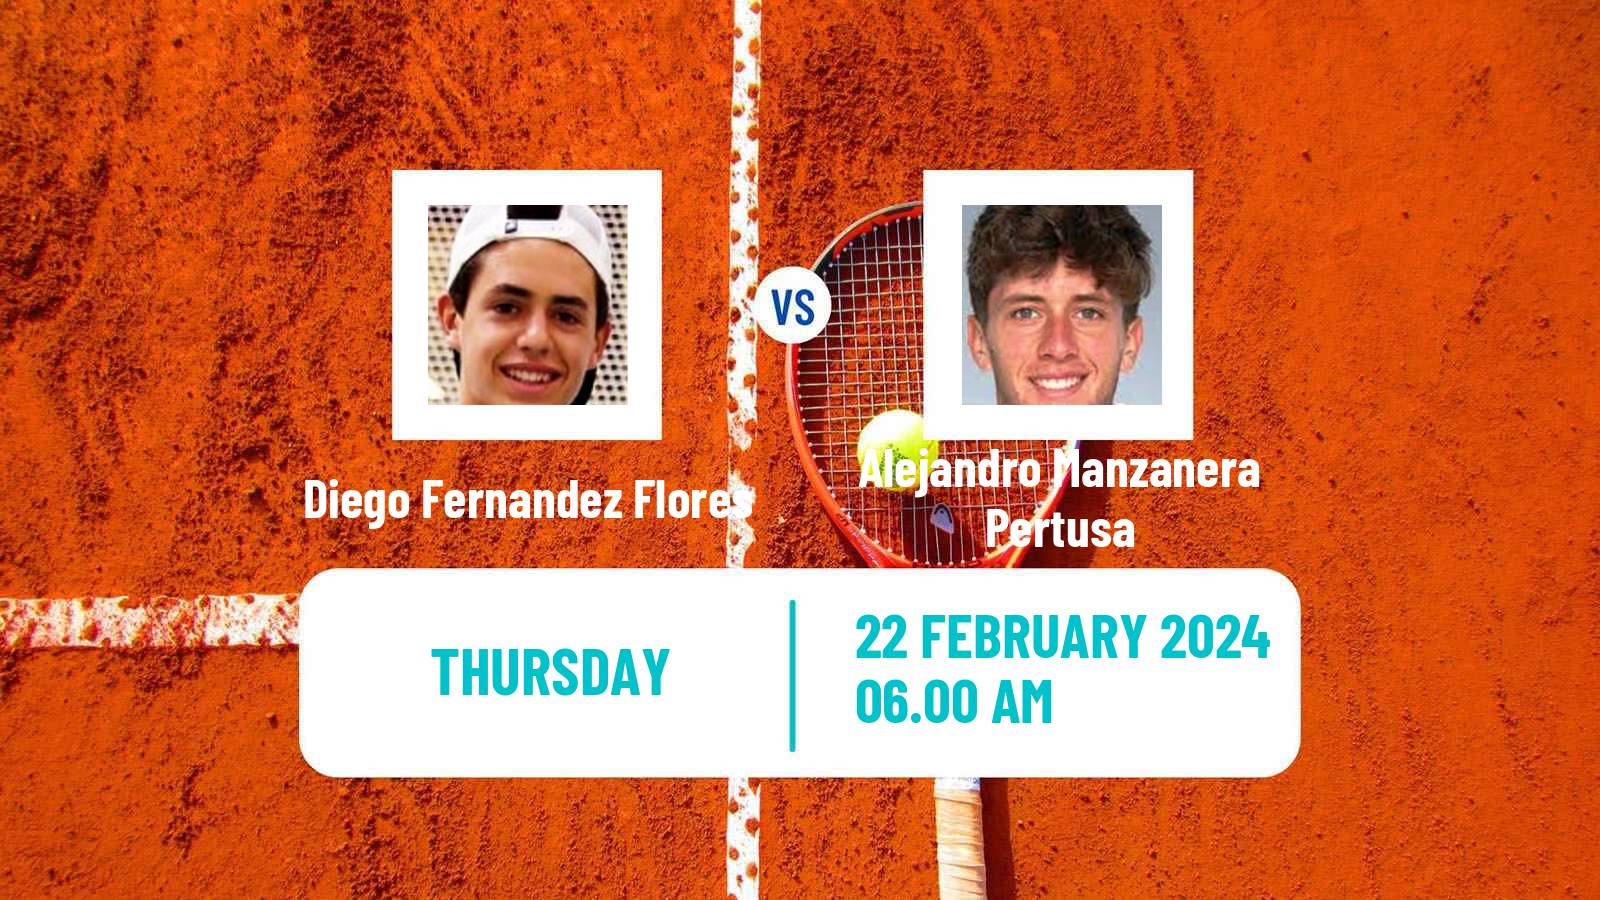 Tennis ITF M15 Villena Men Diego Fernandez Flores - Alejandro Manzanera Pertusa